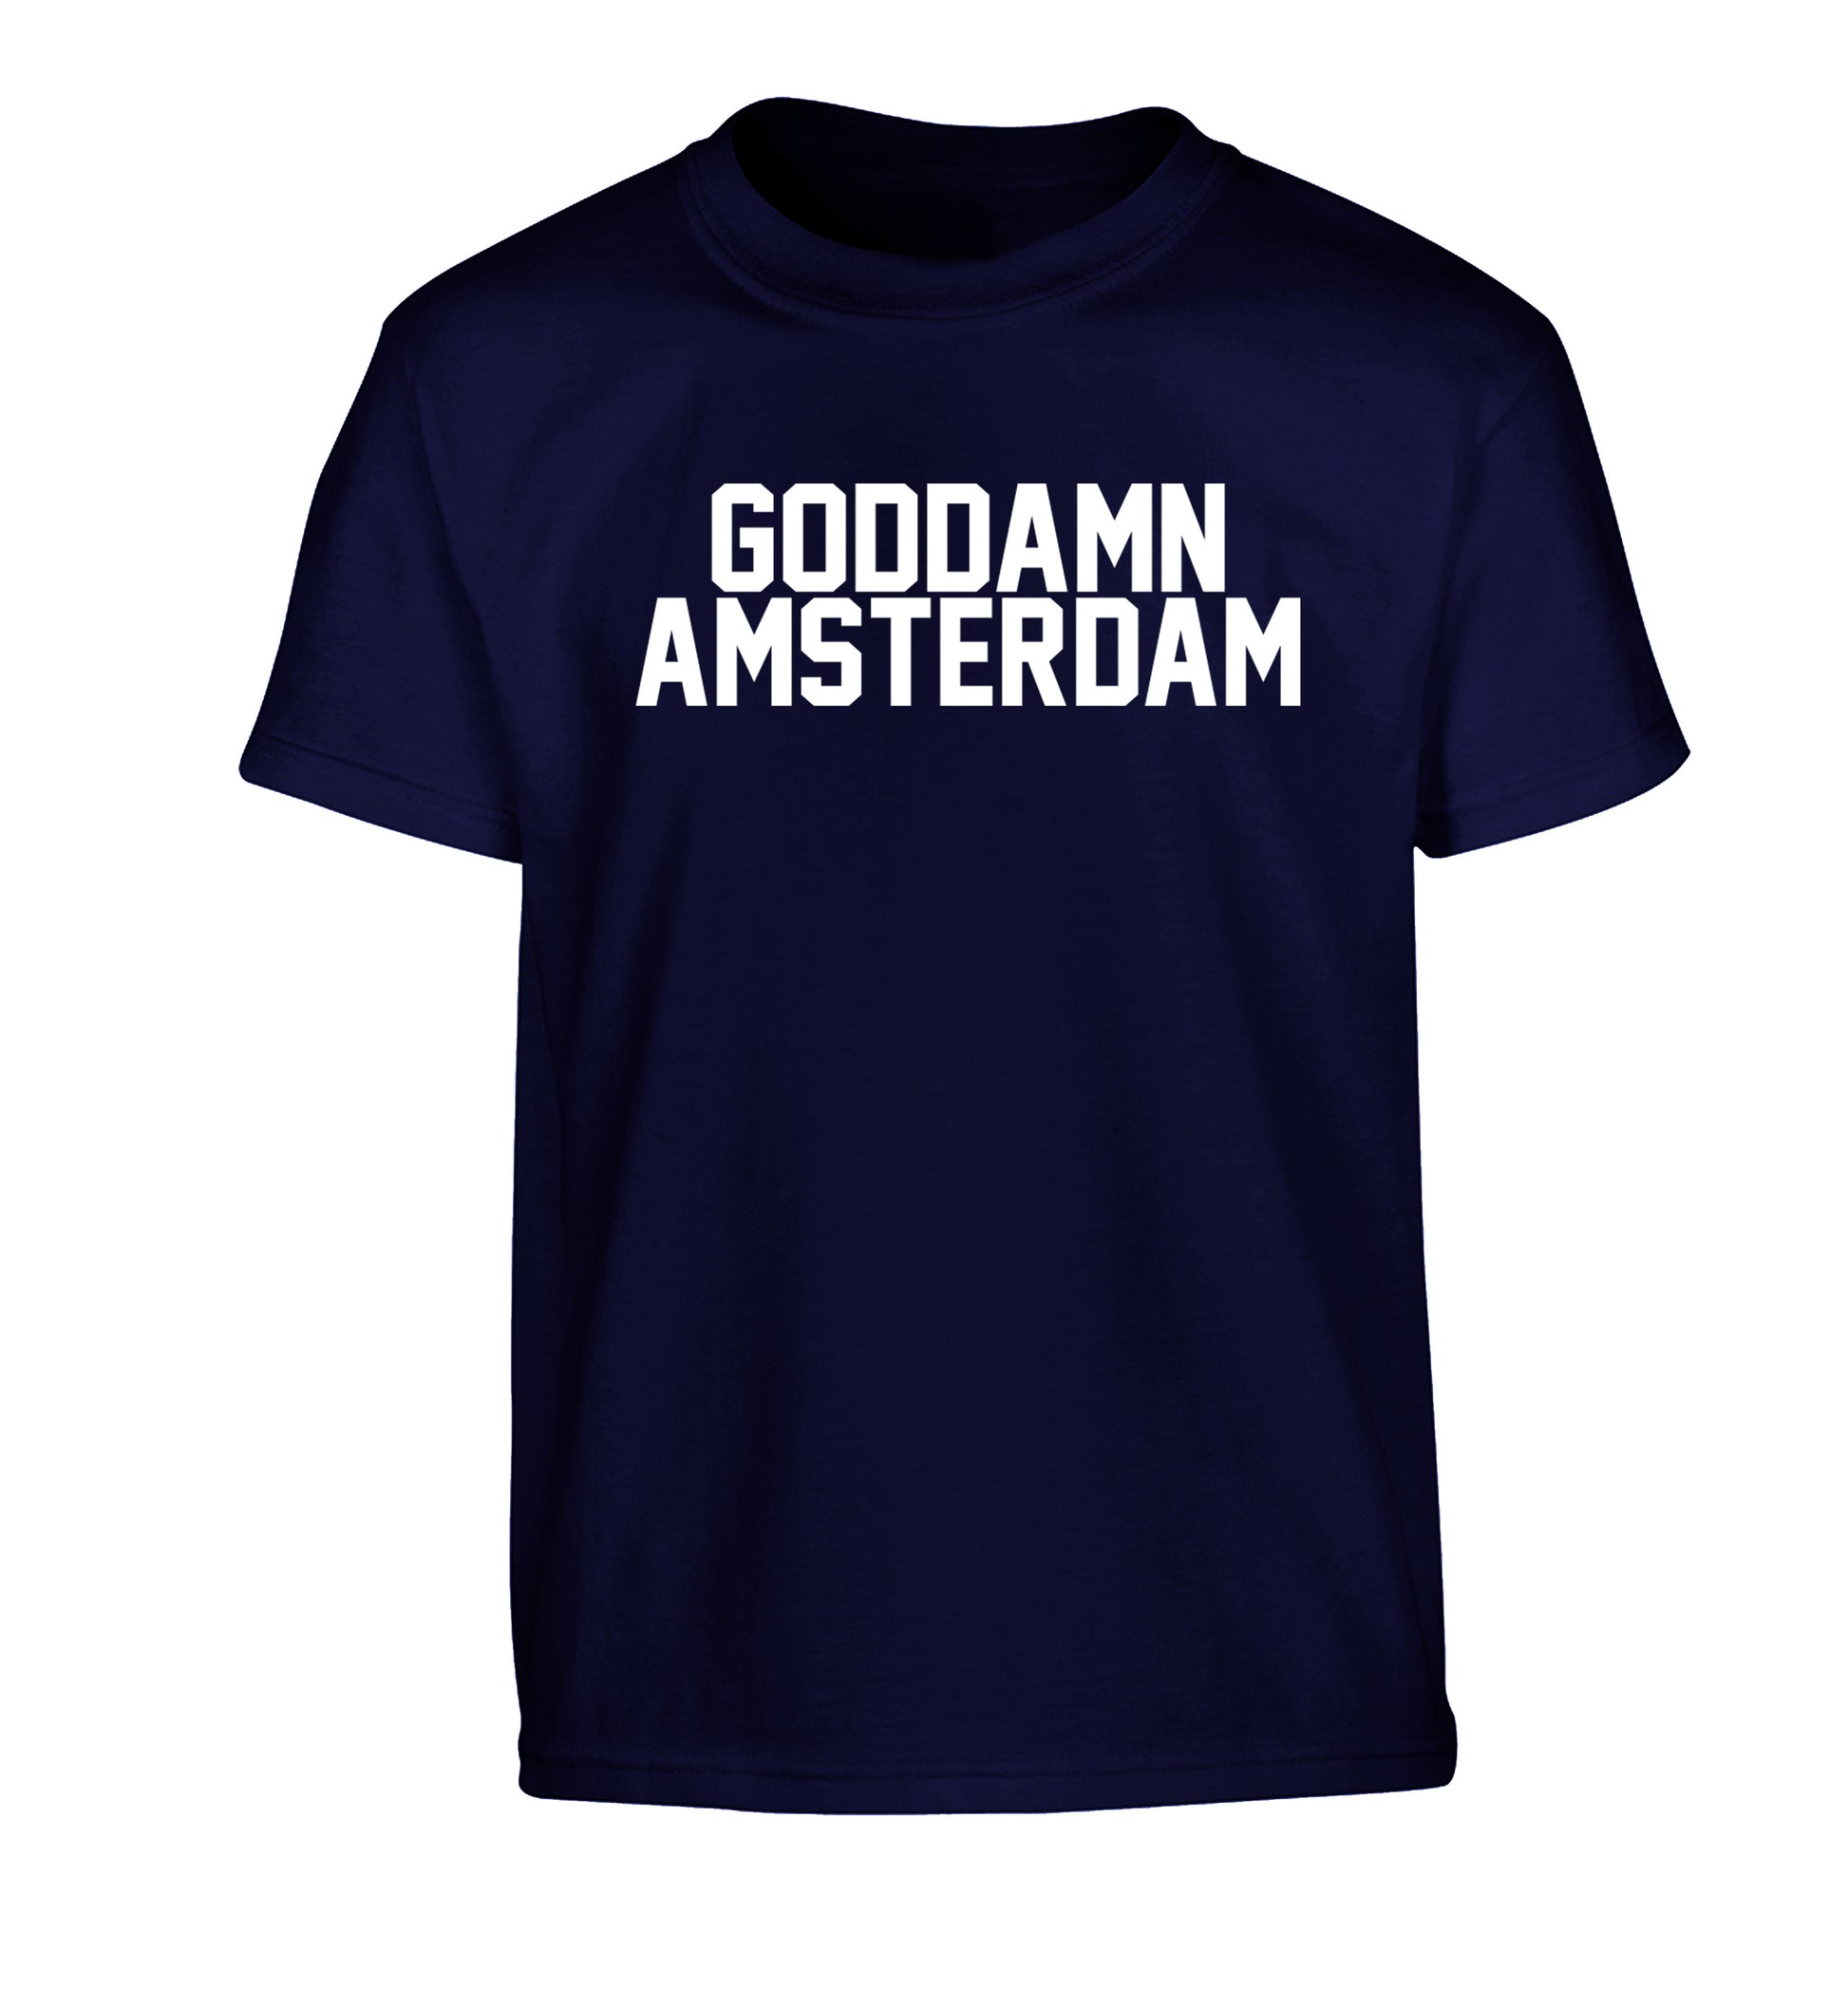 Goddamn Amsterdam Children's navy Tshirt 12-13 Years